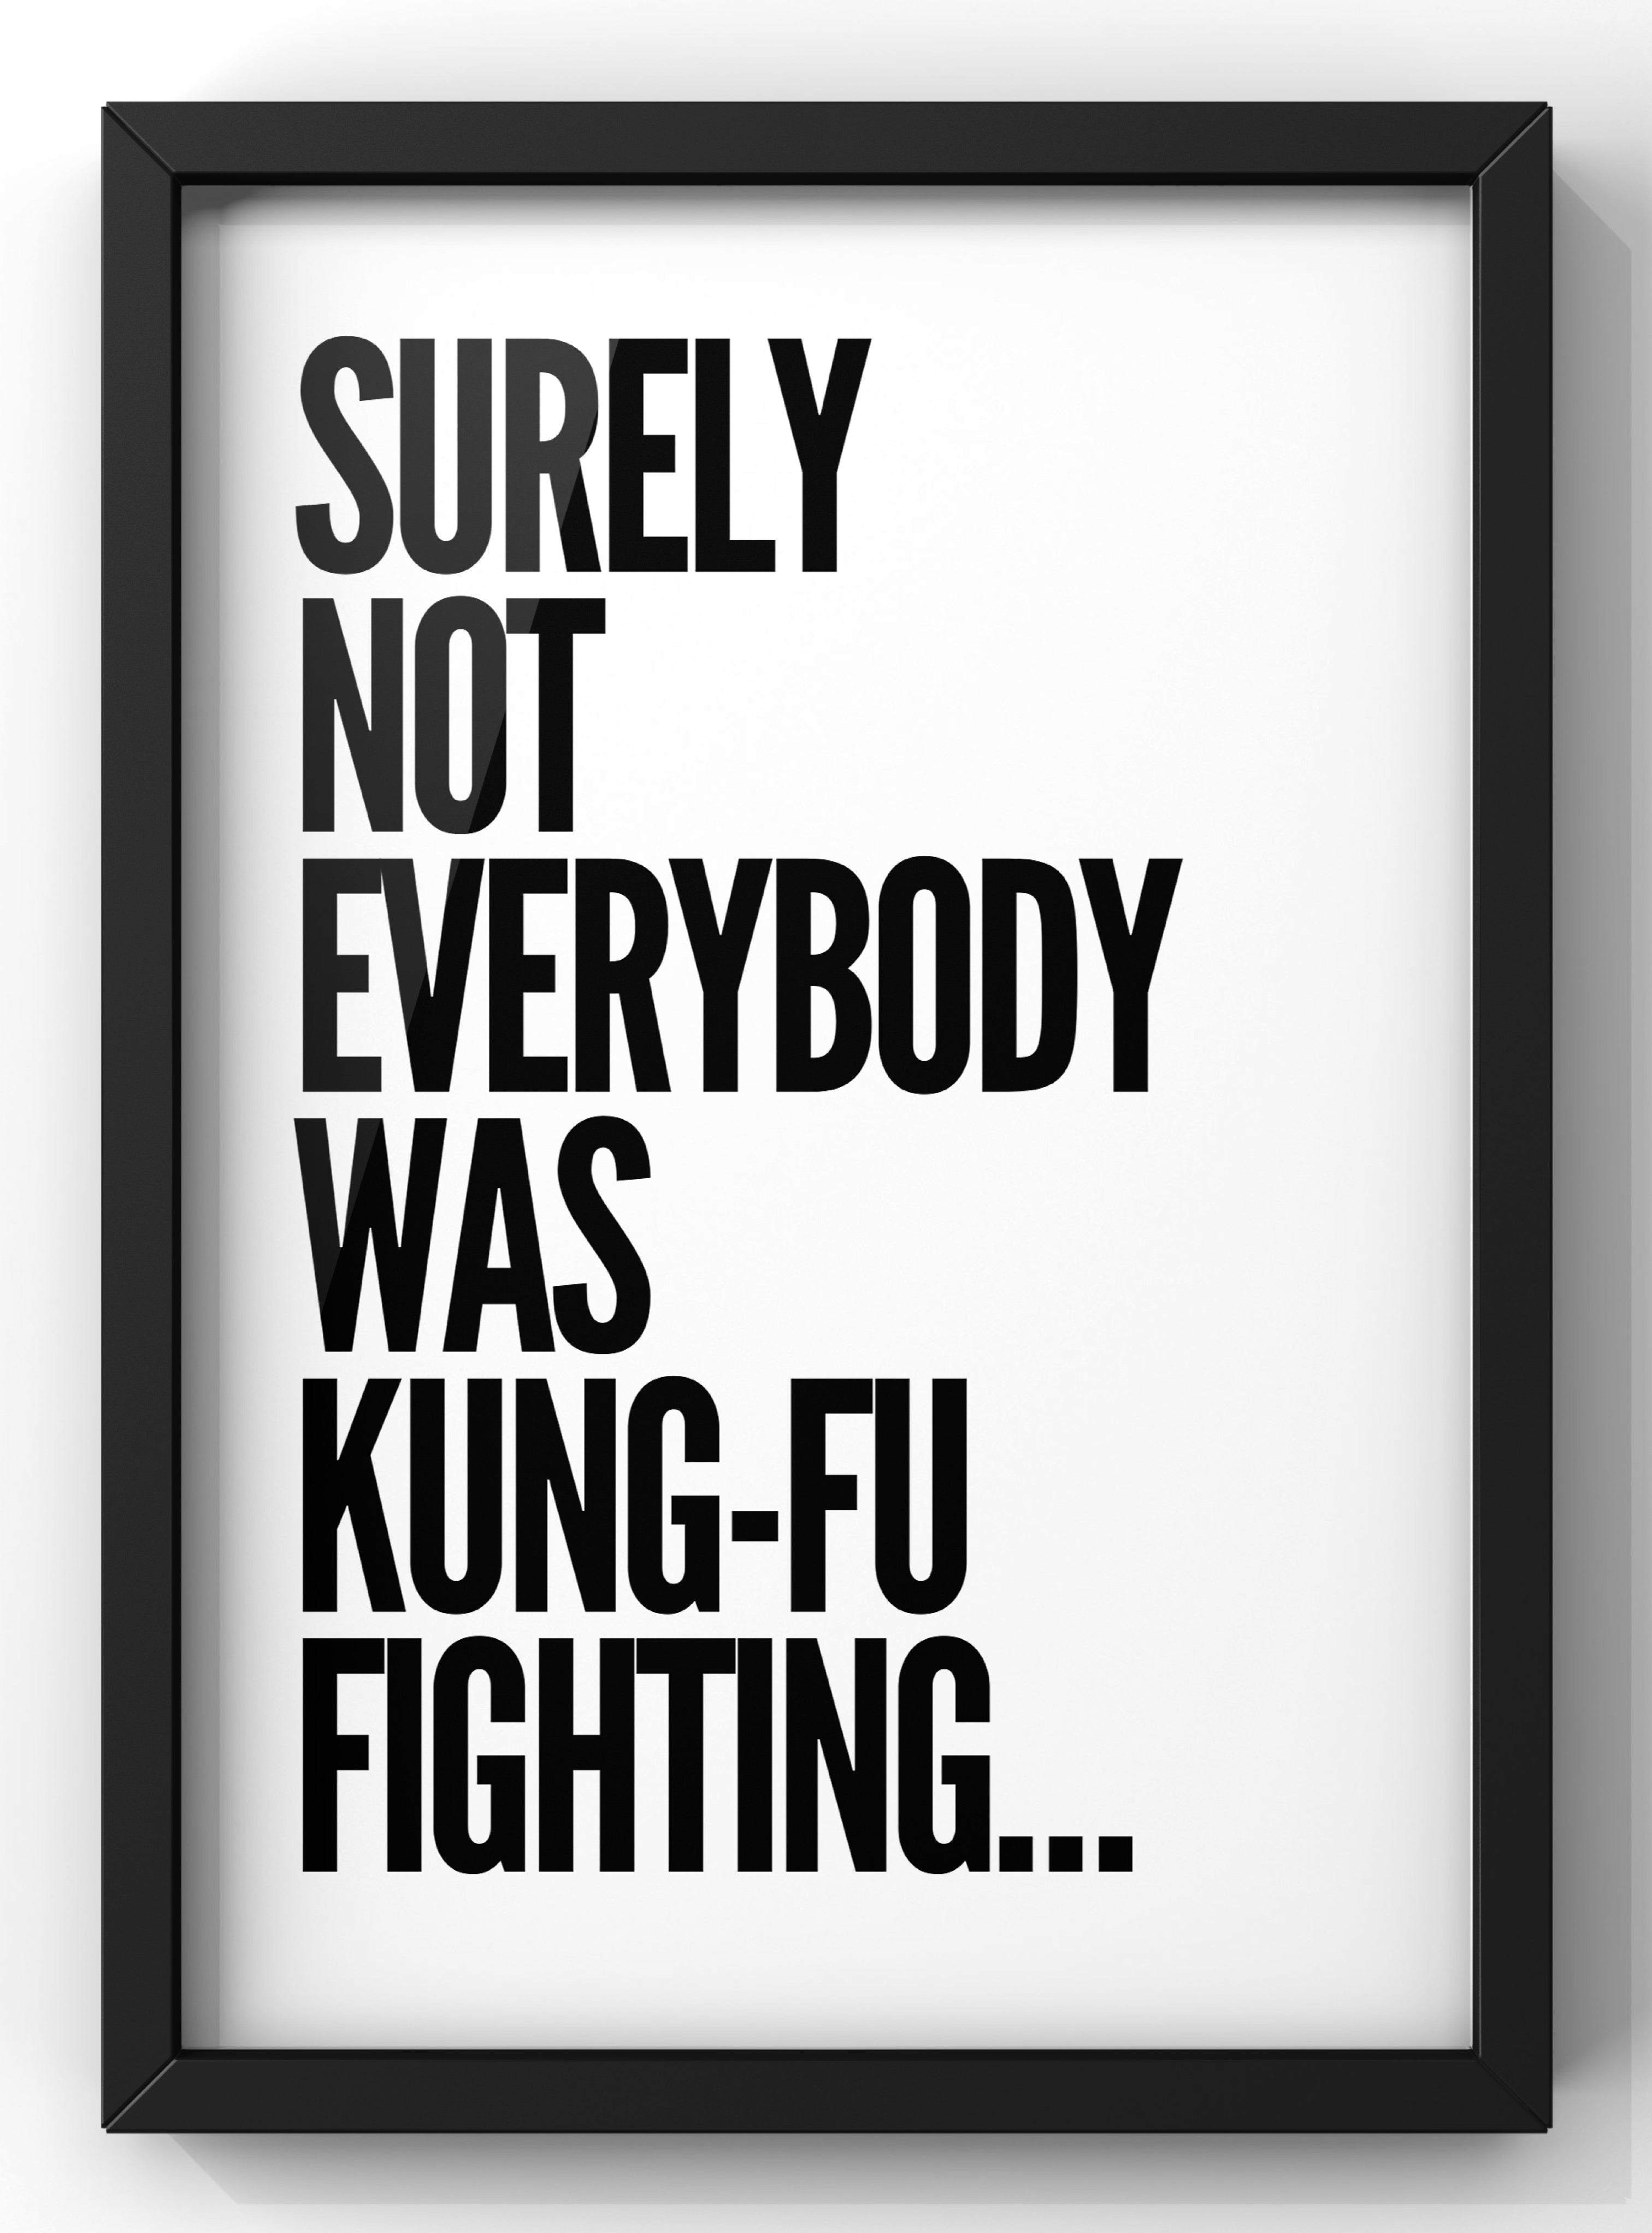 Surely Not Everybody Was Kung Fu Fighting Art Print by kathleenjanedesigns